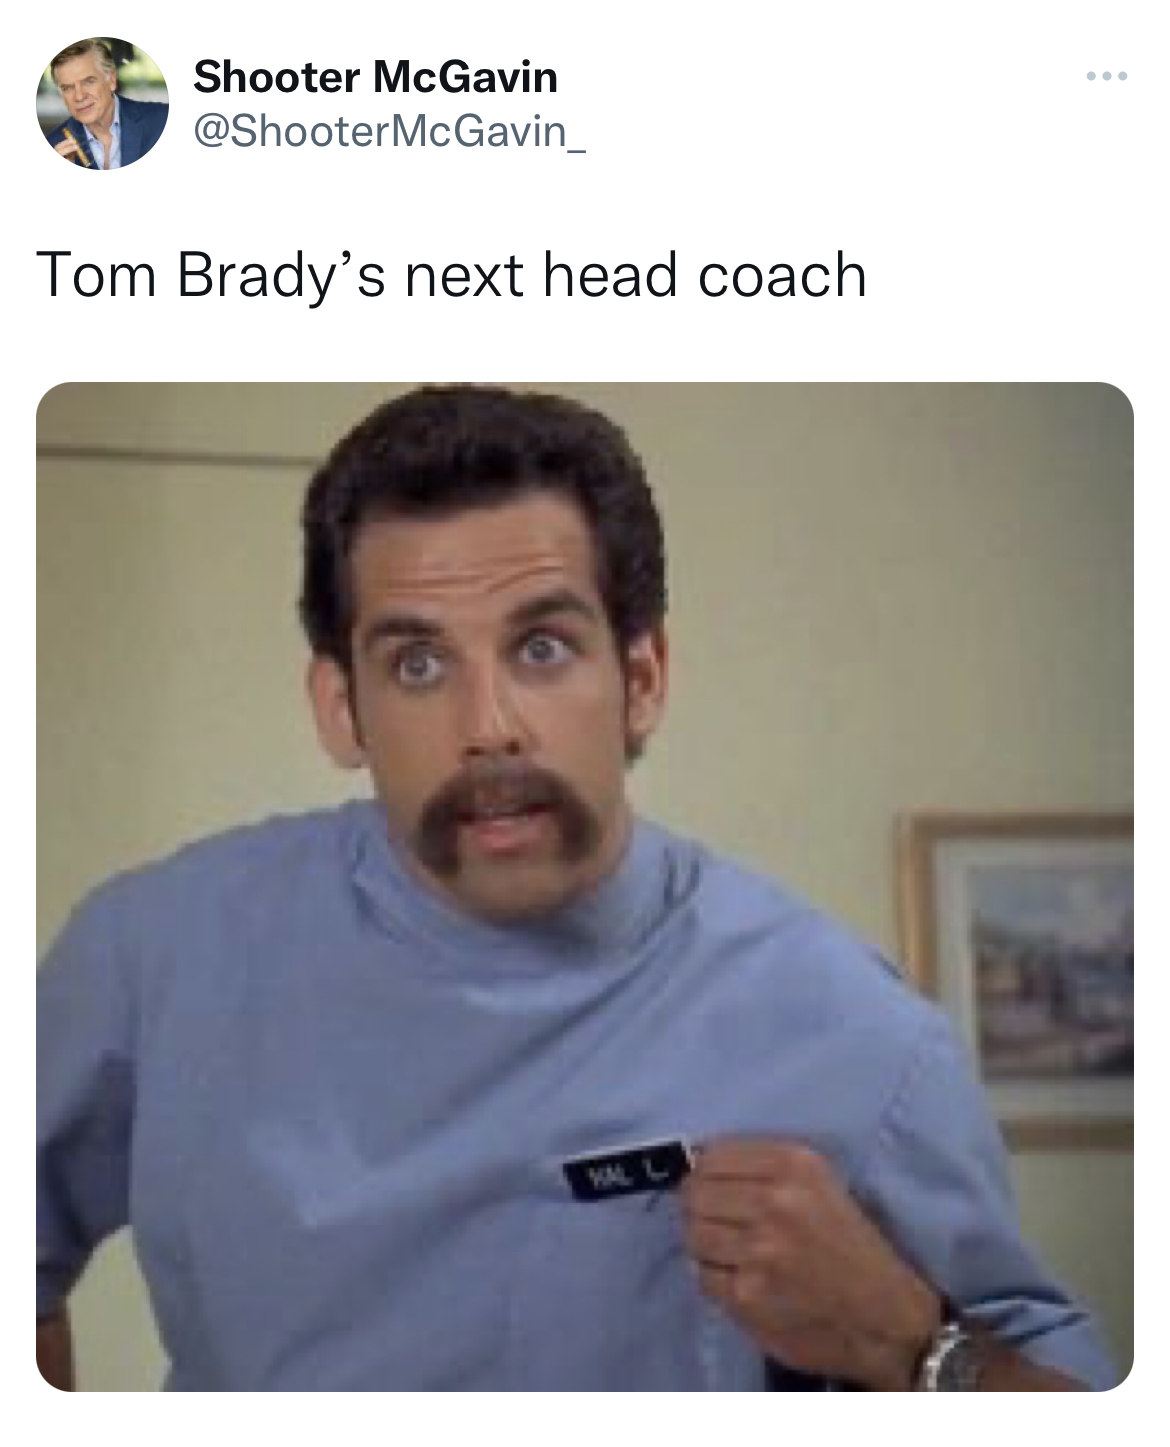 Tom Brady Retirement memes - ben stiller in happy gilmore - Shooter McGavin dy's next head coach